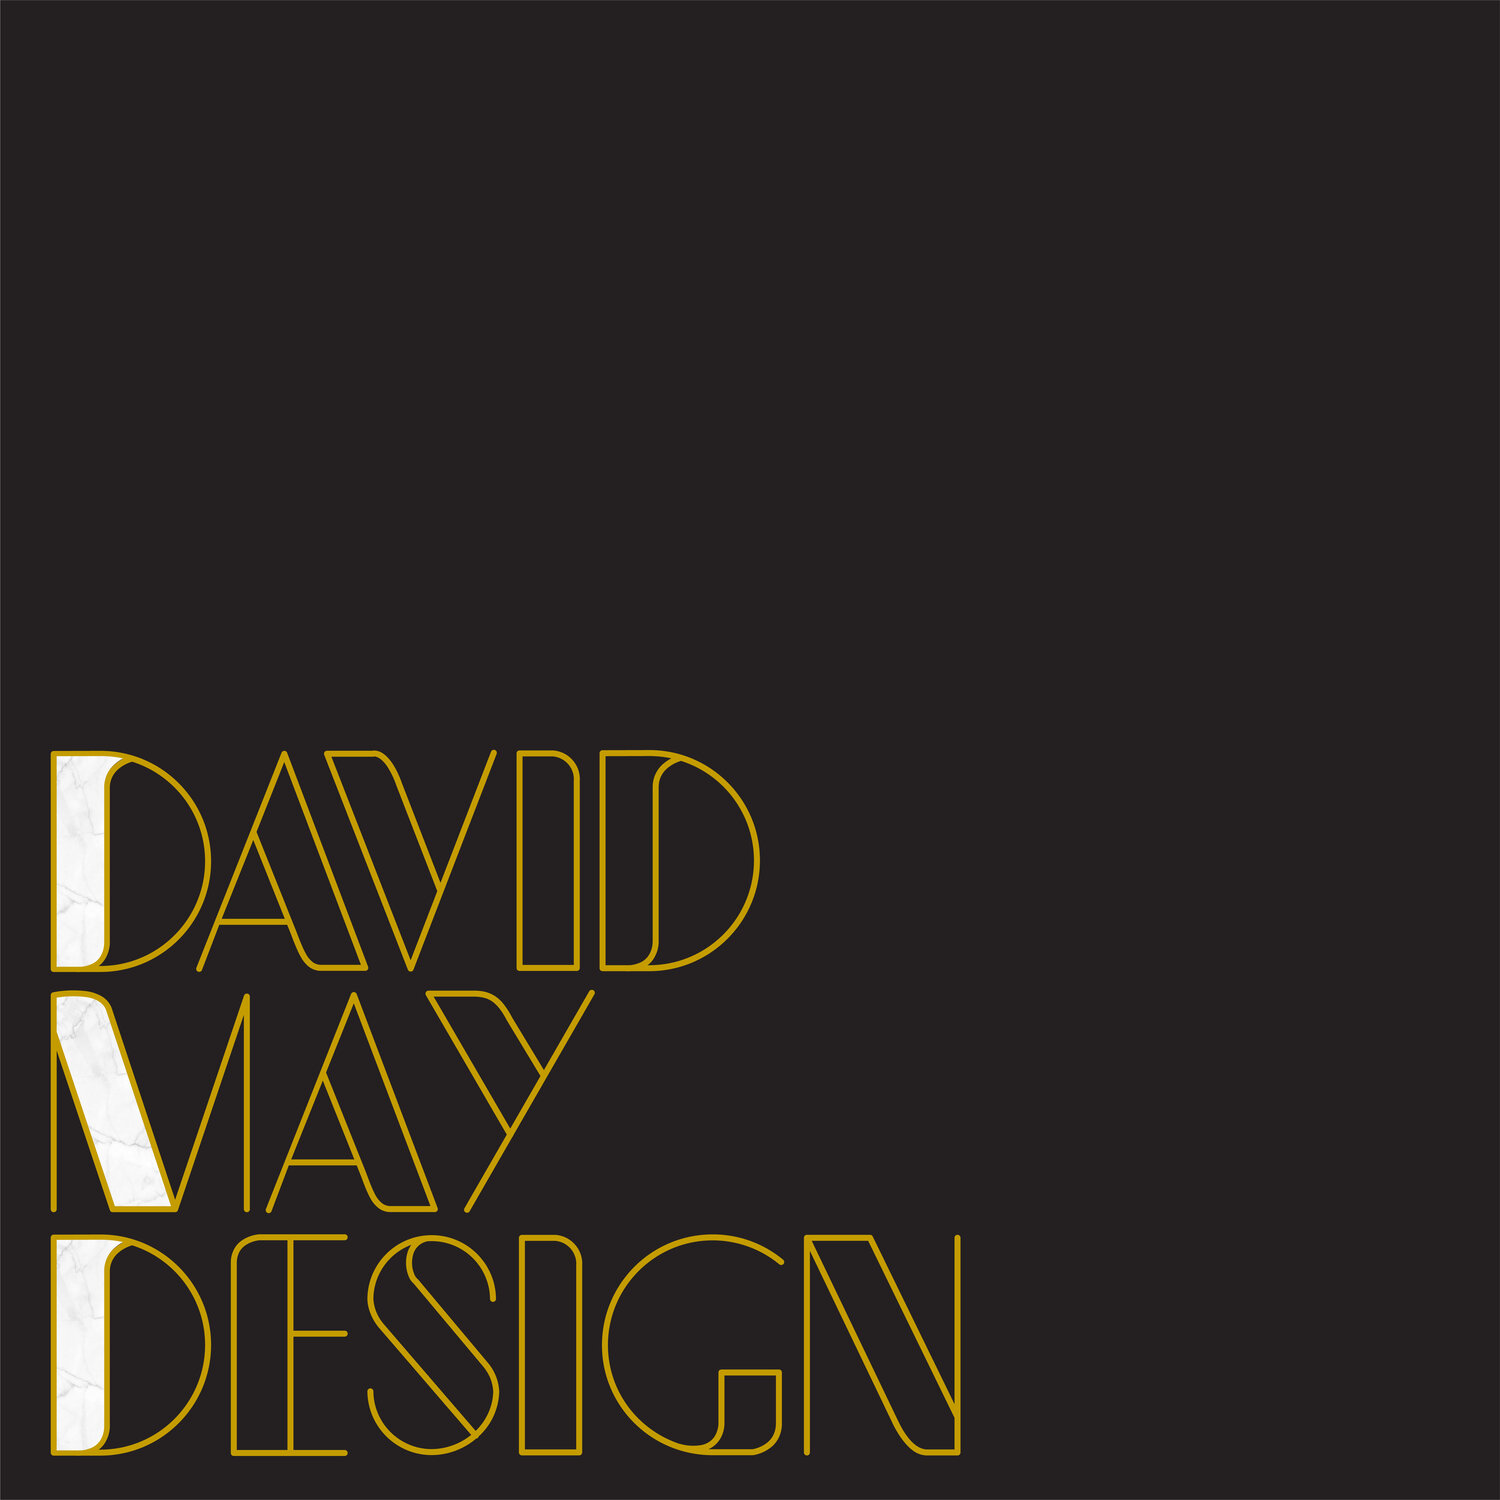 David may design